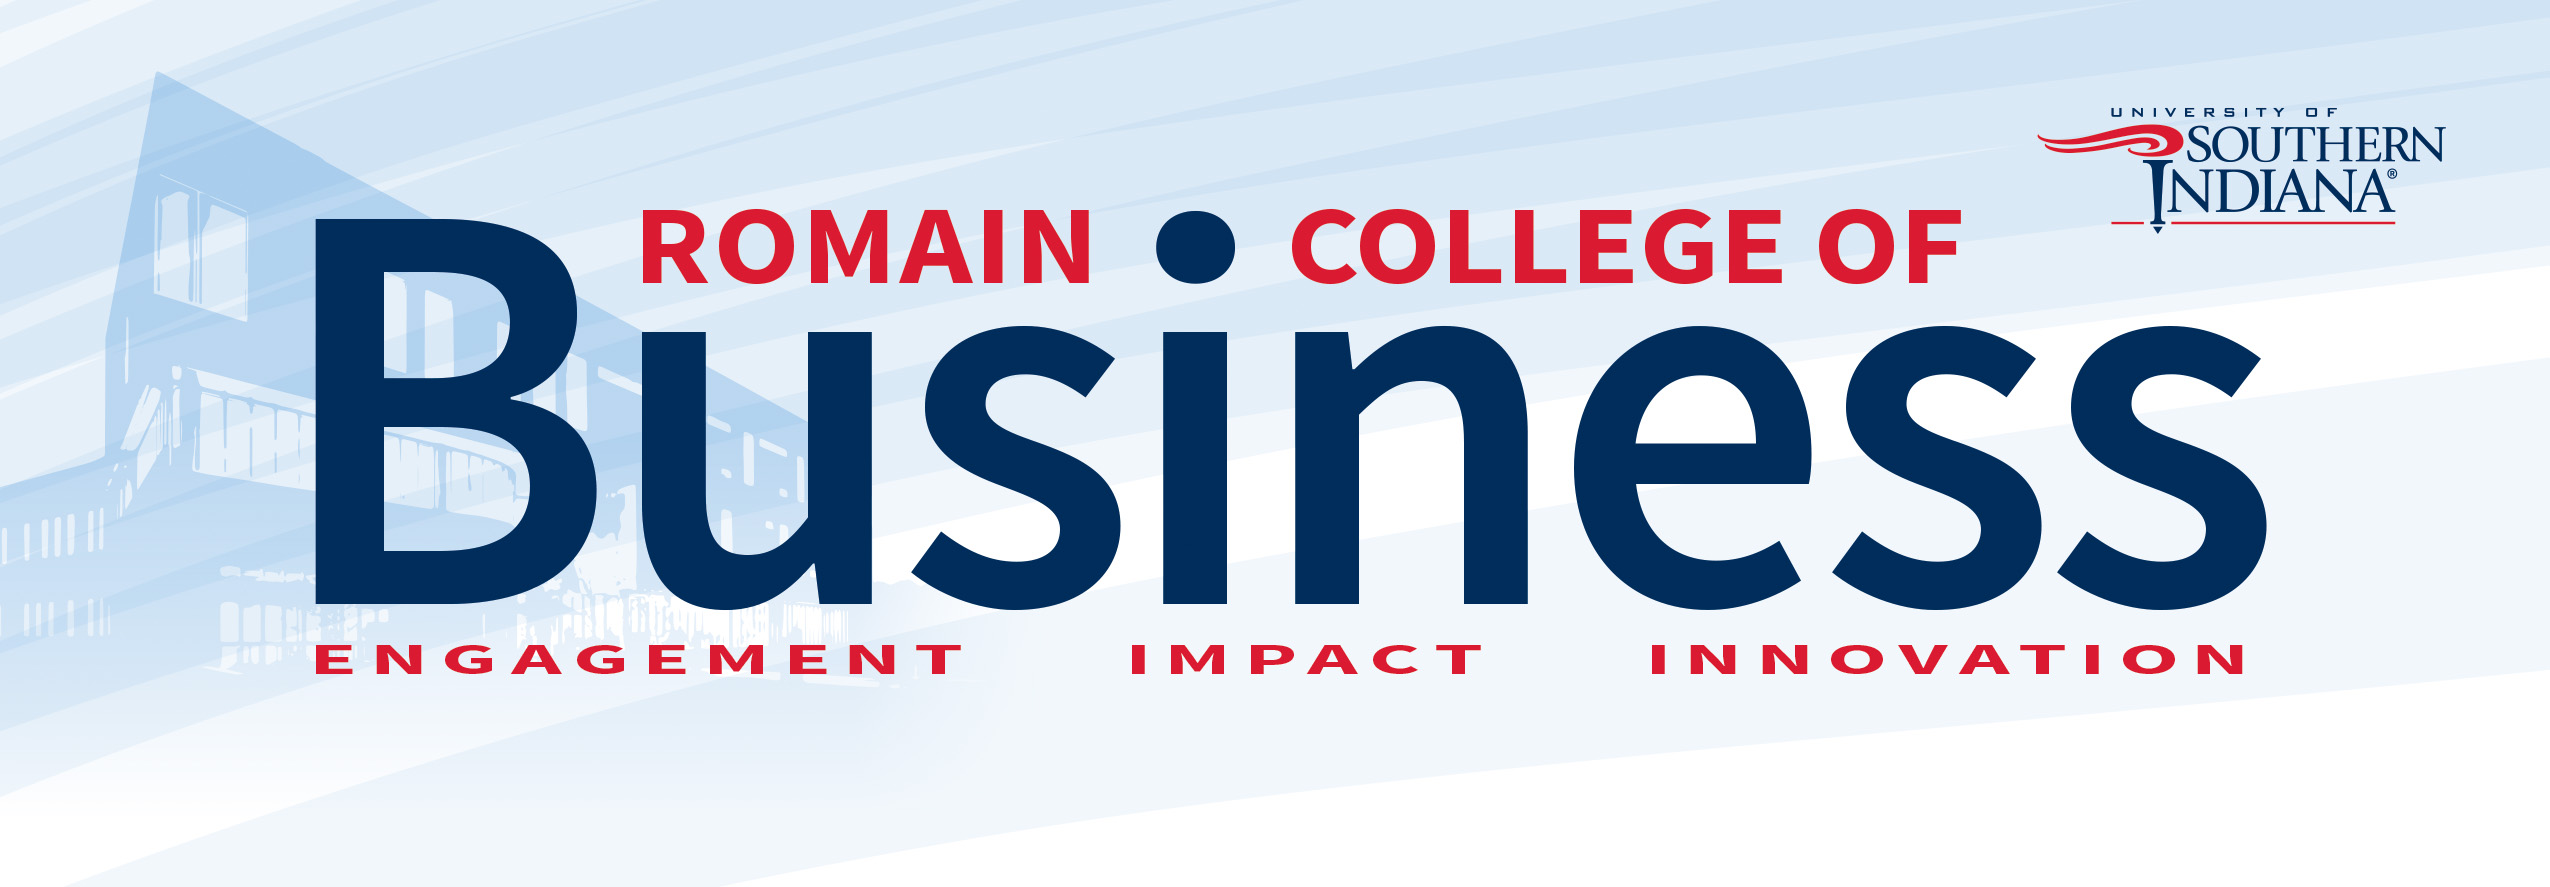 Romain College of Business newsletter banner wordmark